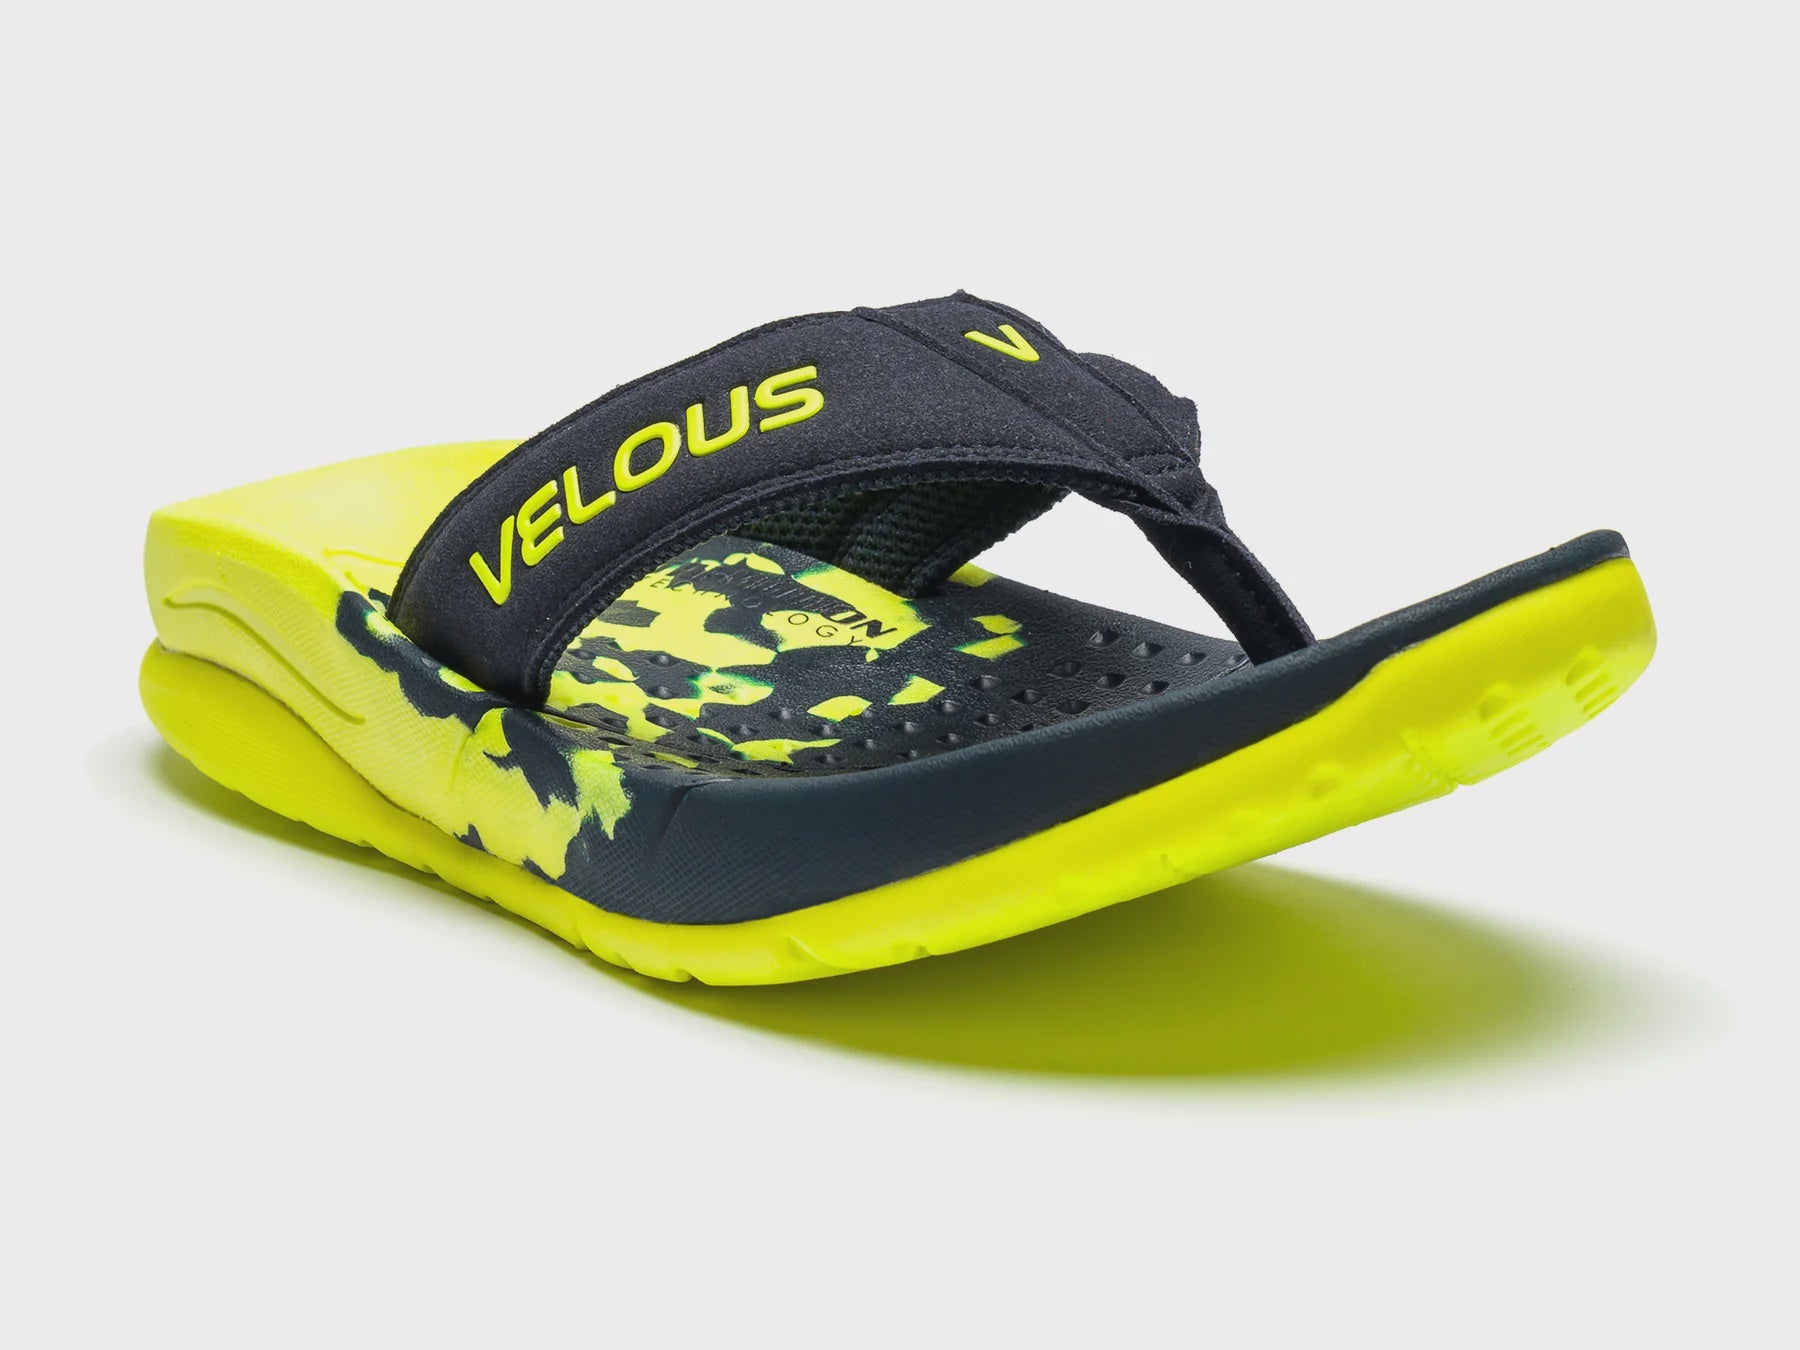 Velous Pacific Flip Neon Yellow Navy